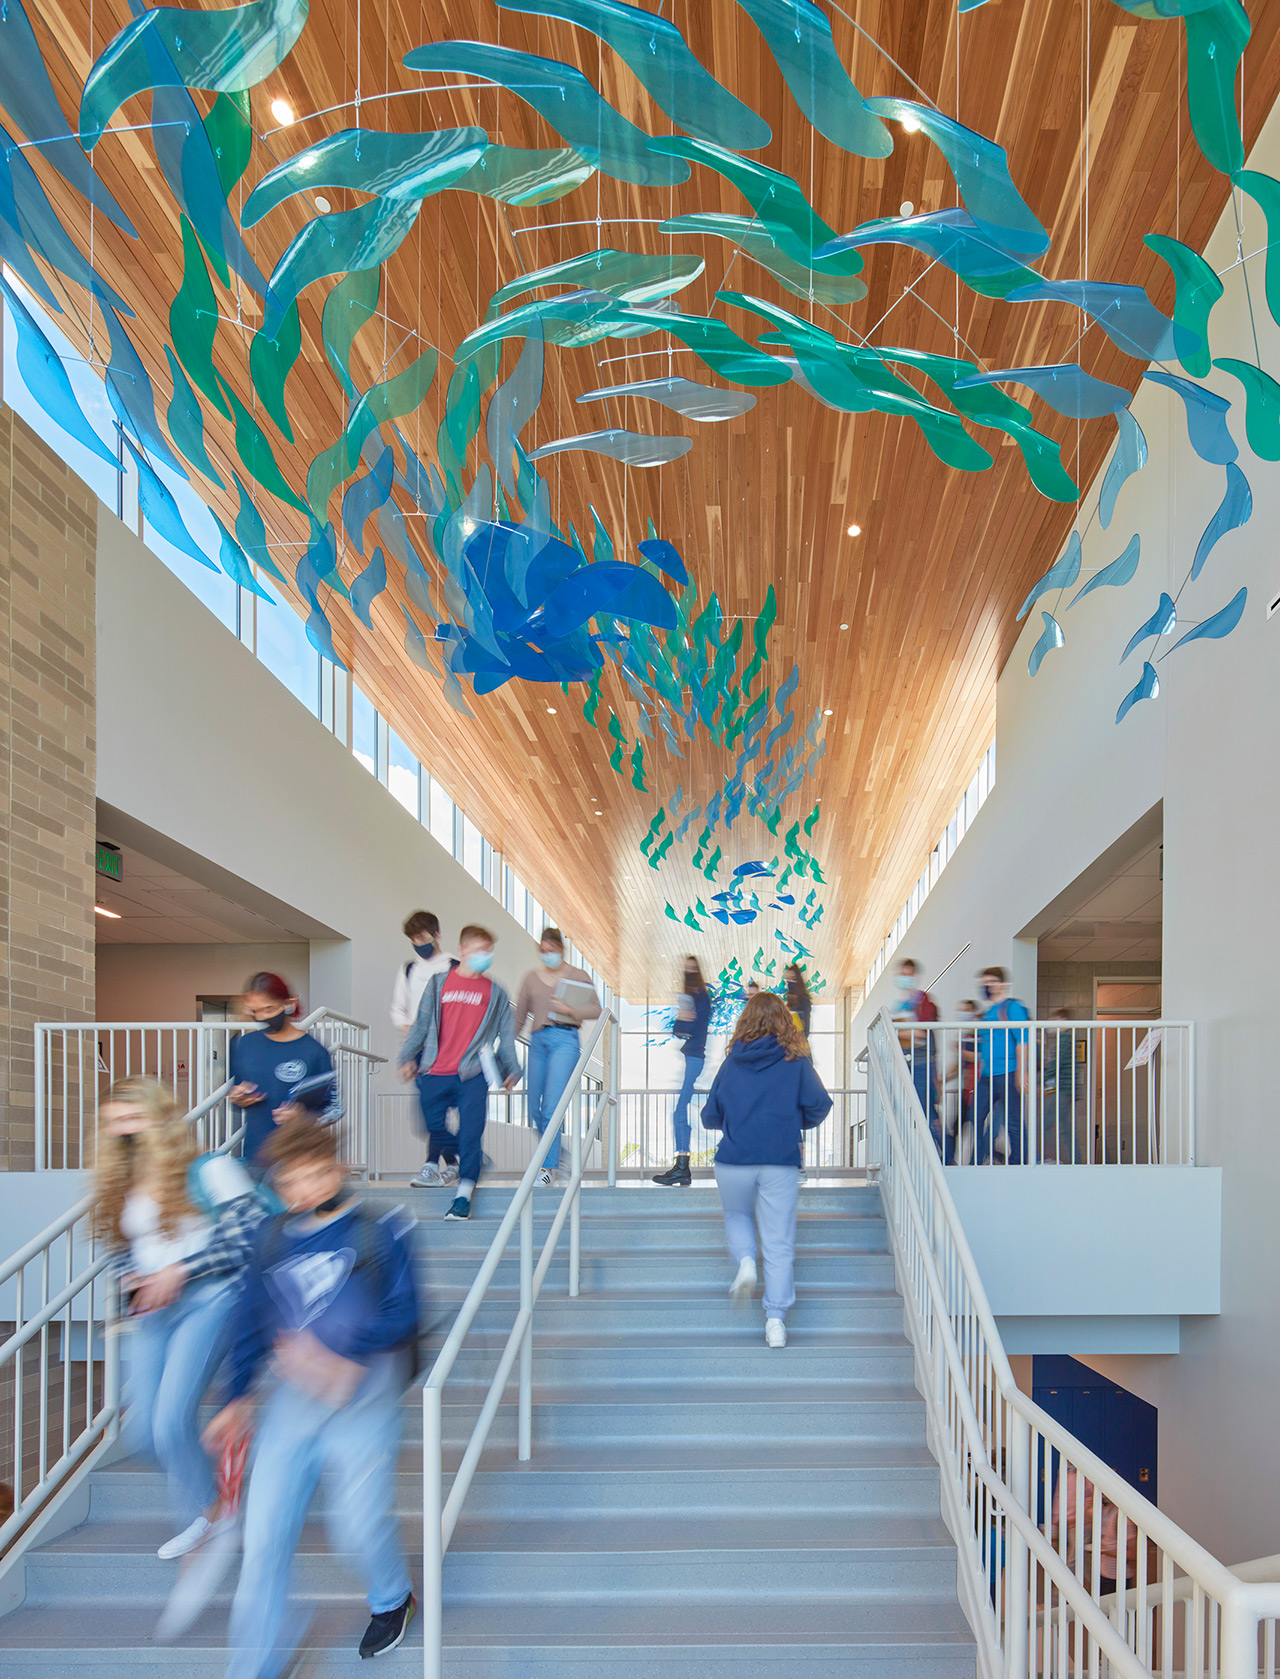 Revere High School, Corridor and art installation